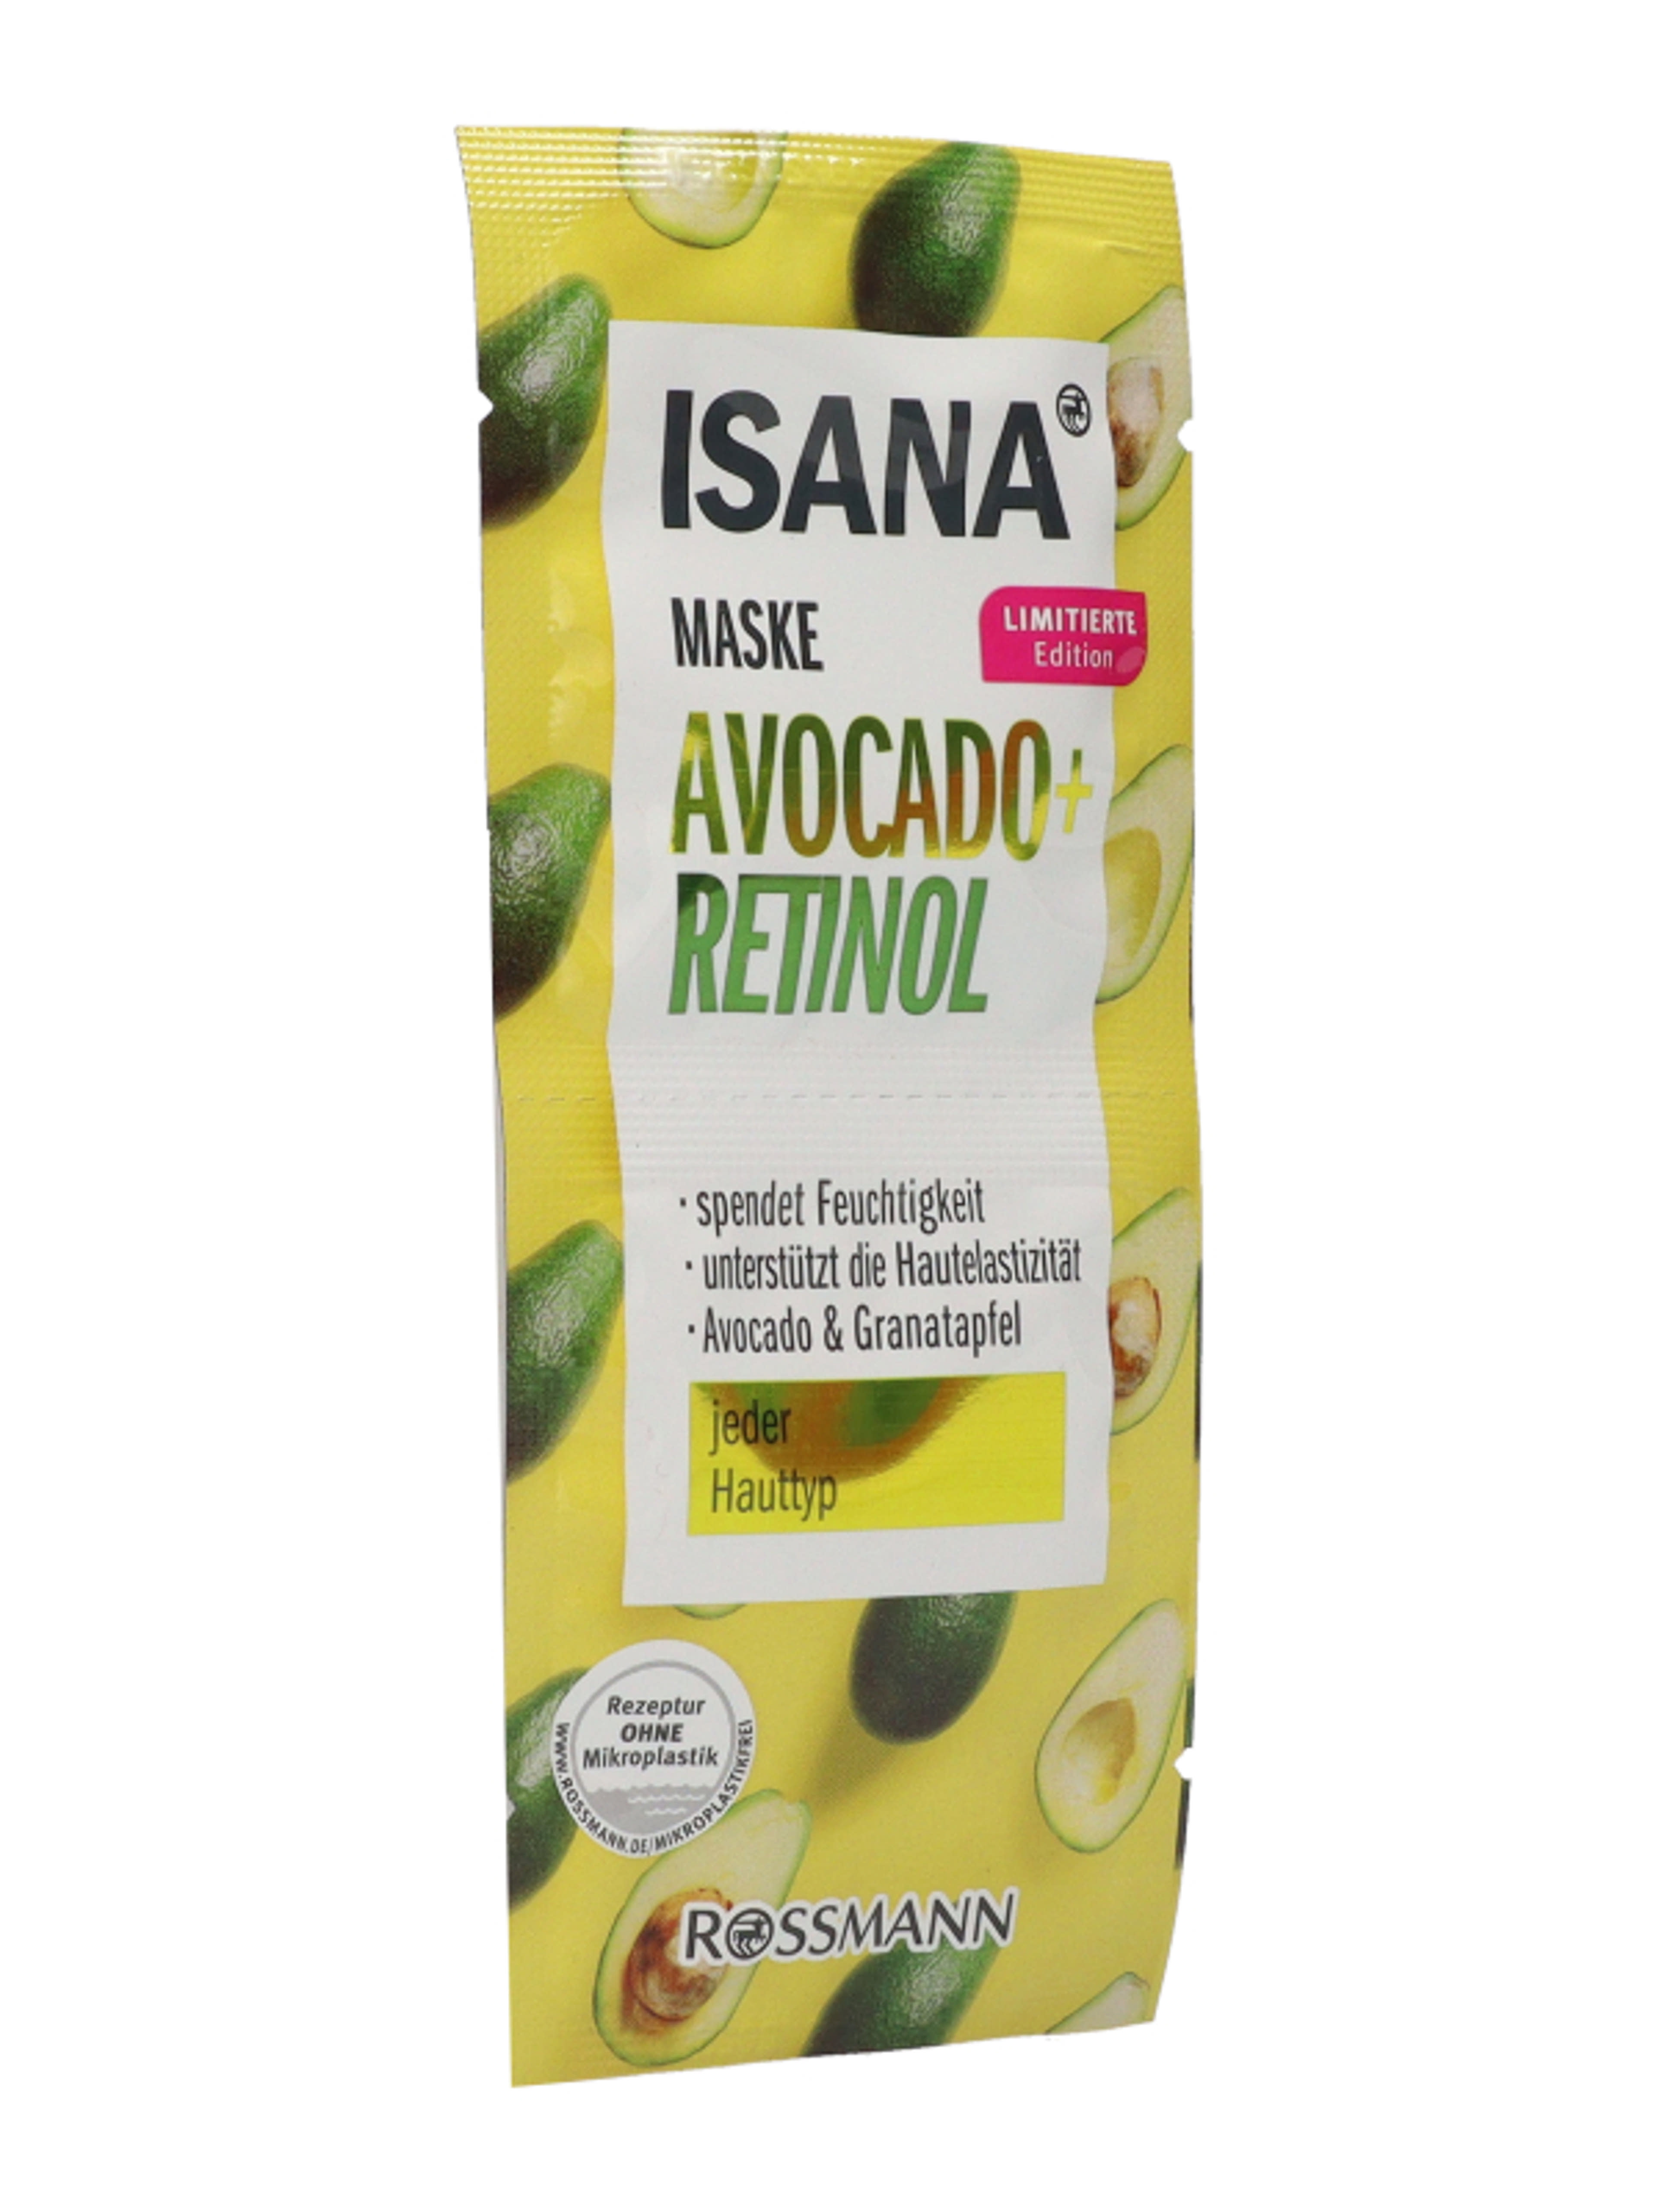 Isana Retinol Avocado maszk 2x8 ml - 16 ml-3